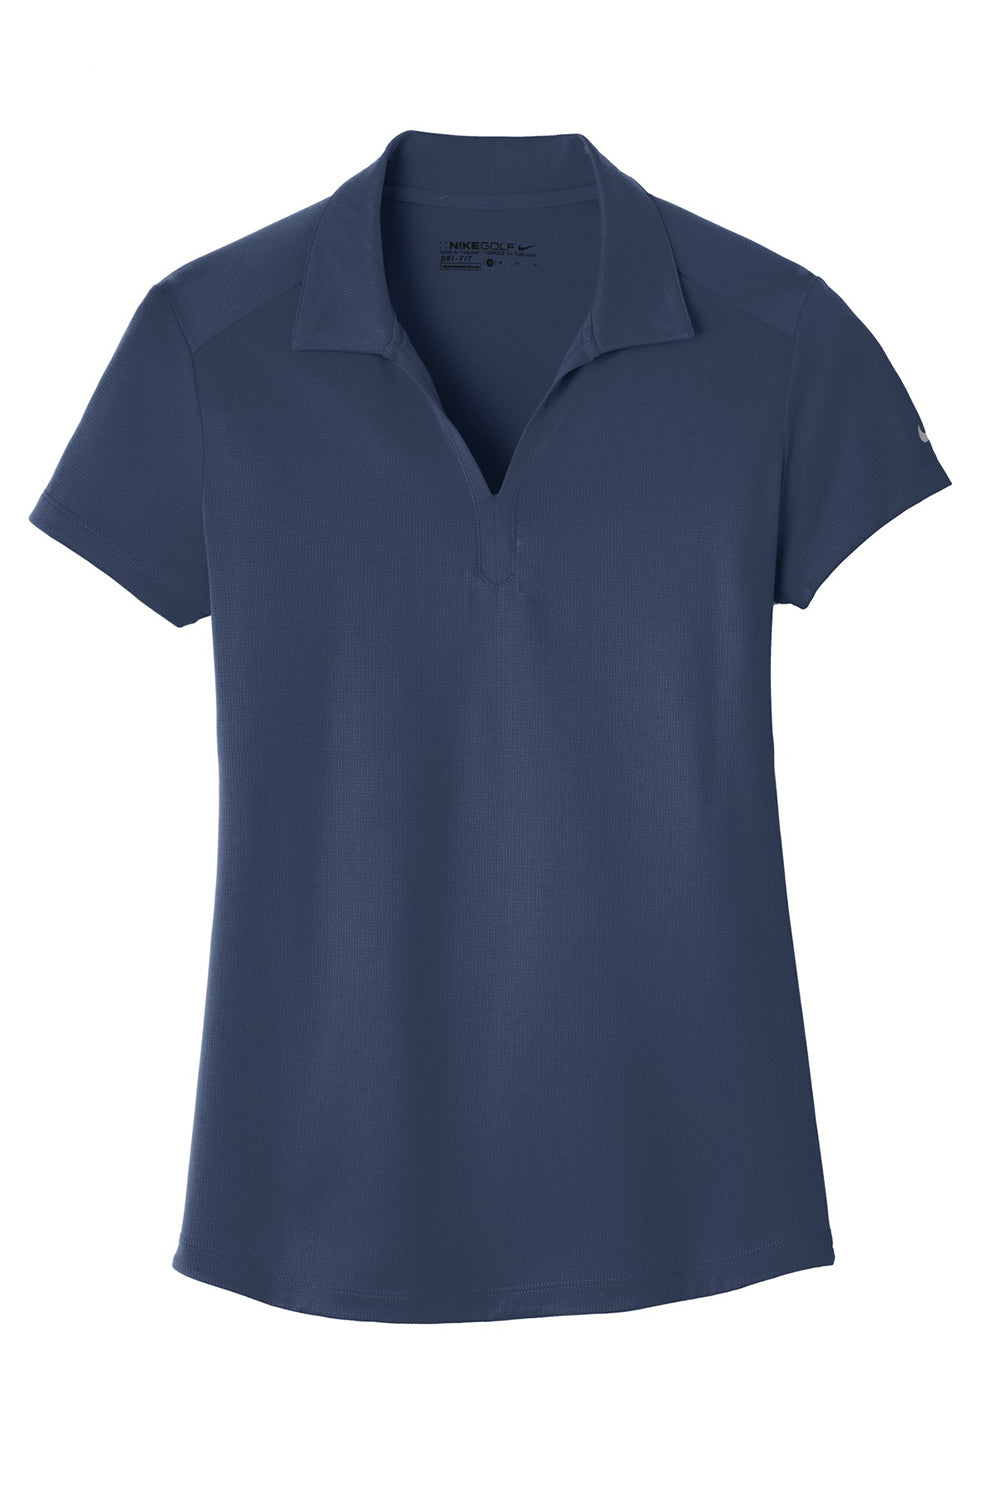 Nike 838957 Womens Legacy Dri-Fit Moisture Wicking Short Sleeve Polo Shirt Midnight Navy Blue Flat Front